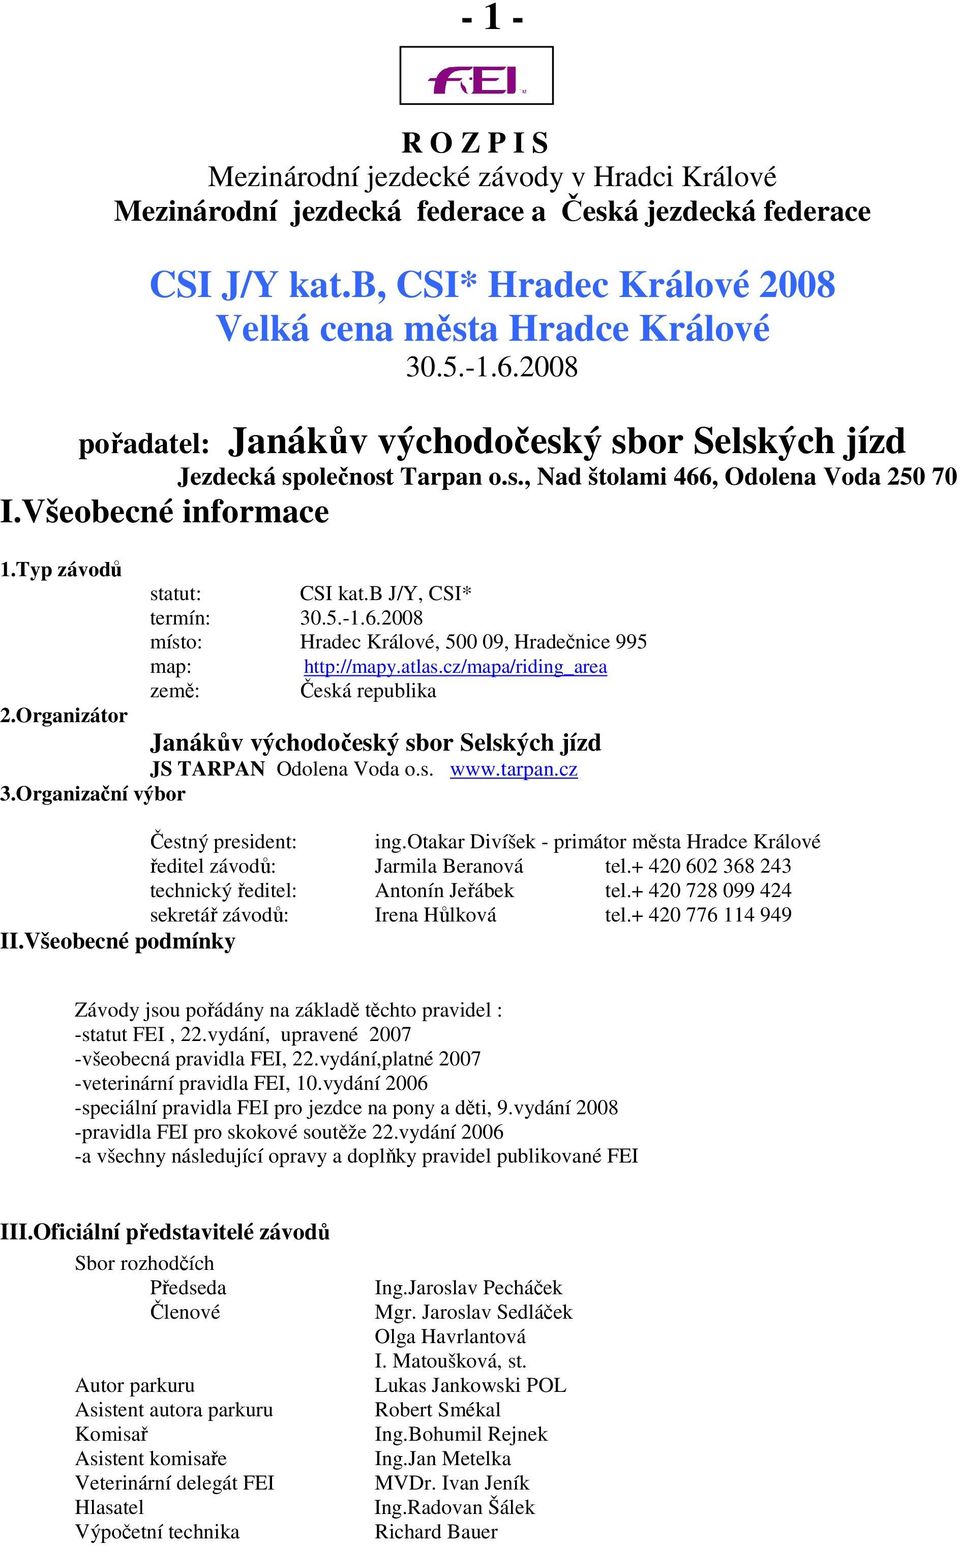 b J/Y, CSI* termín: 30.5.-1.6.2008 místo: Hradec Králové, 500 09, Hradečnice 995 map: http://mapy.atlas.